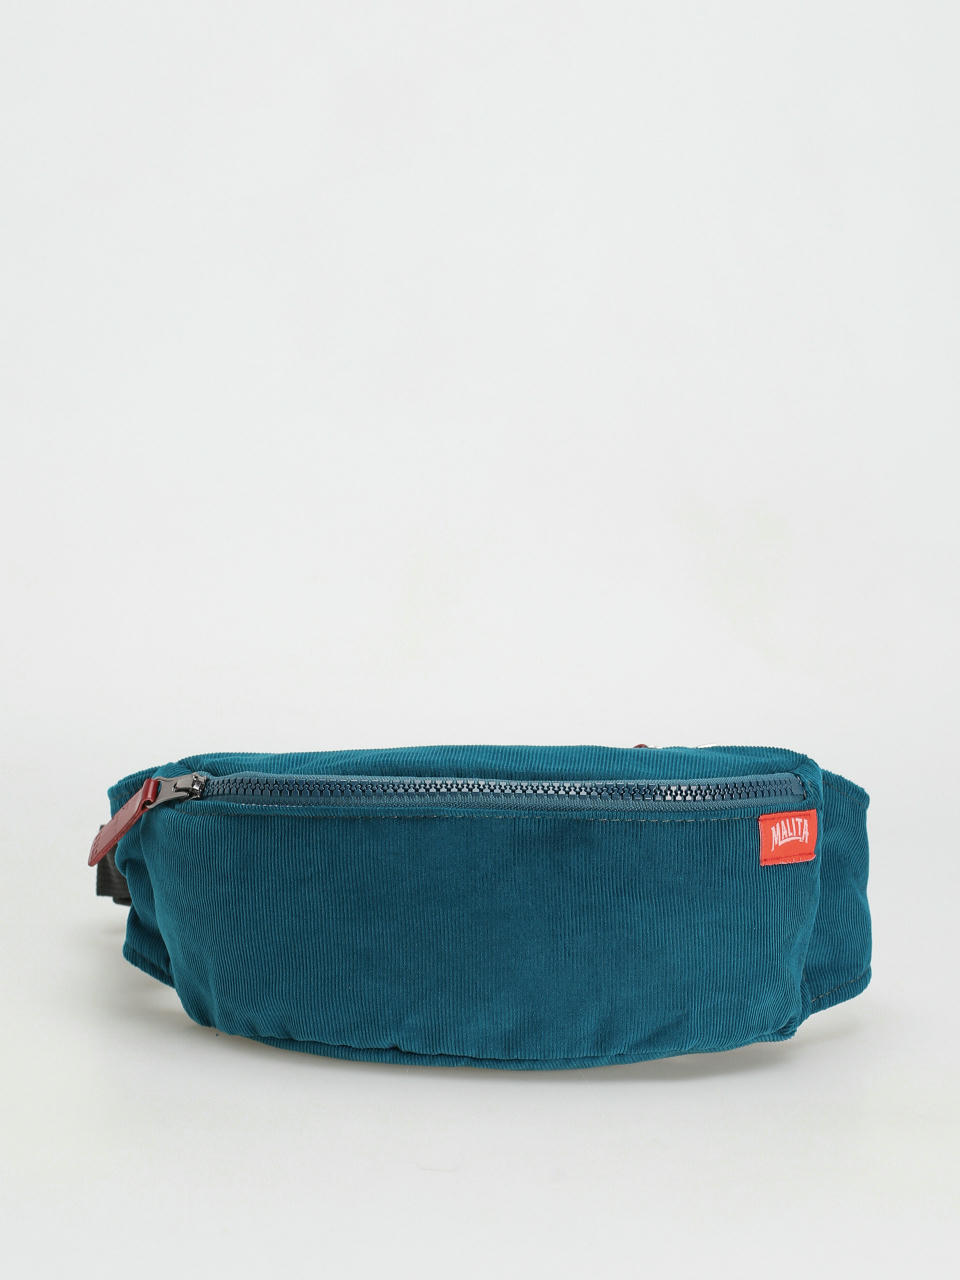 Malita Cord 1 Bum bag (blue)